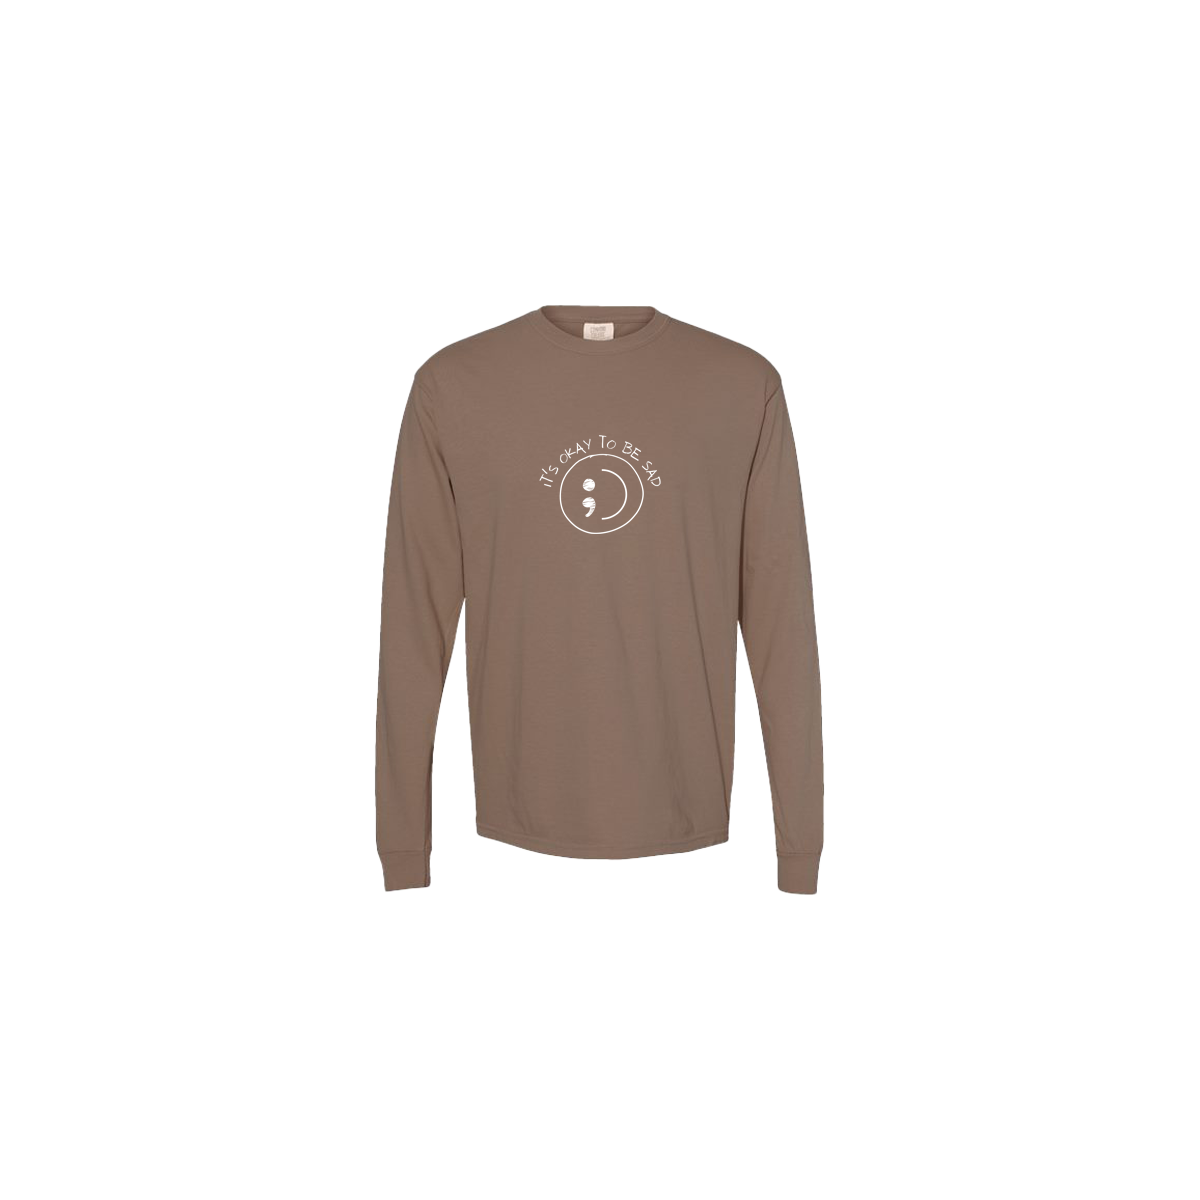 It's Okay to be Sad Embroidered Brown Long Sleeve Tshirt - Mental Health Awareness Clothing